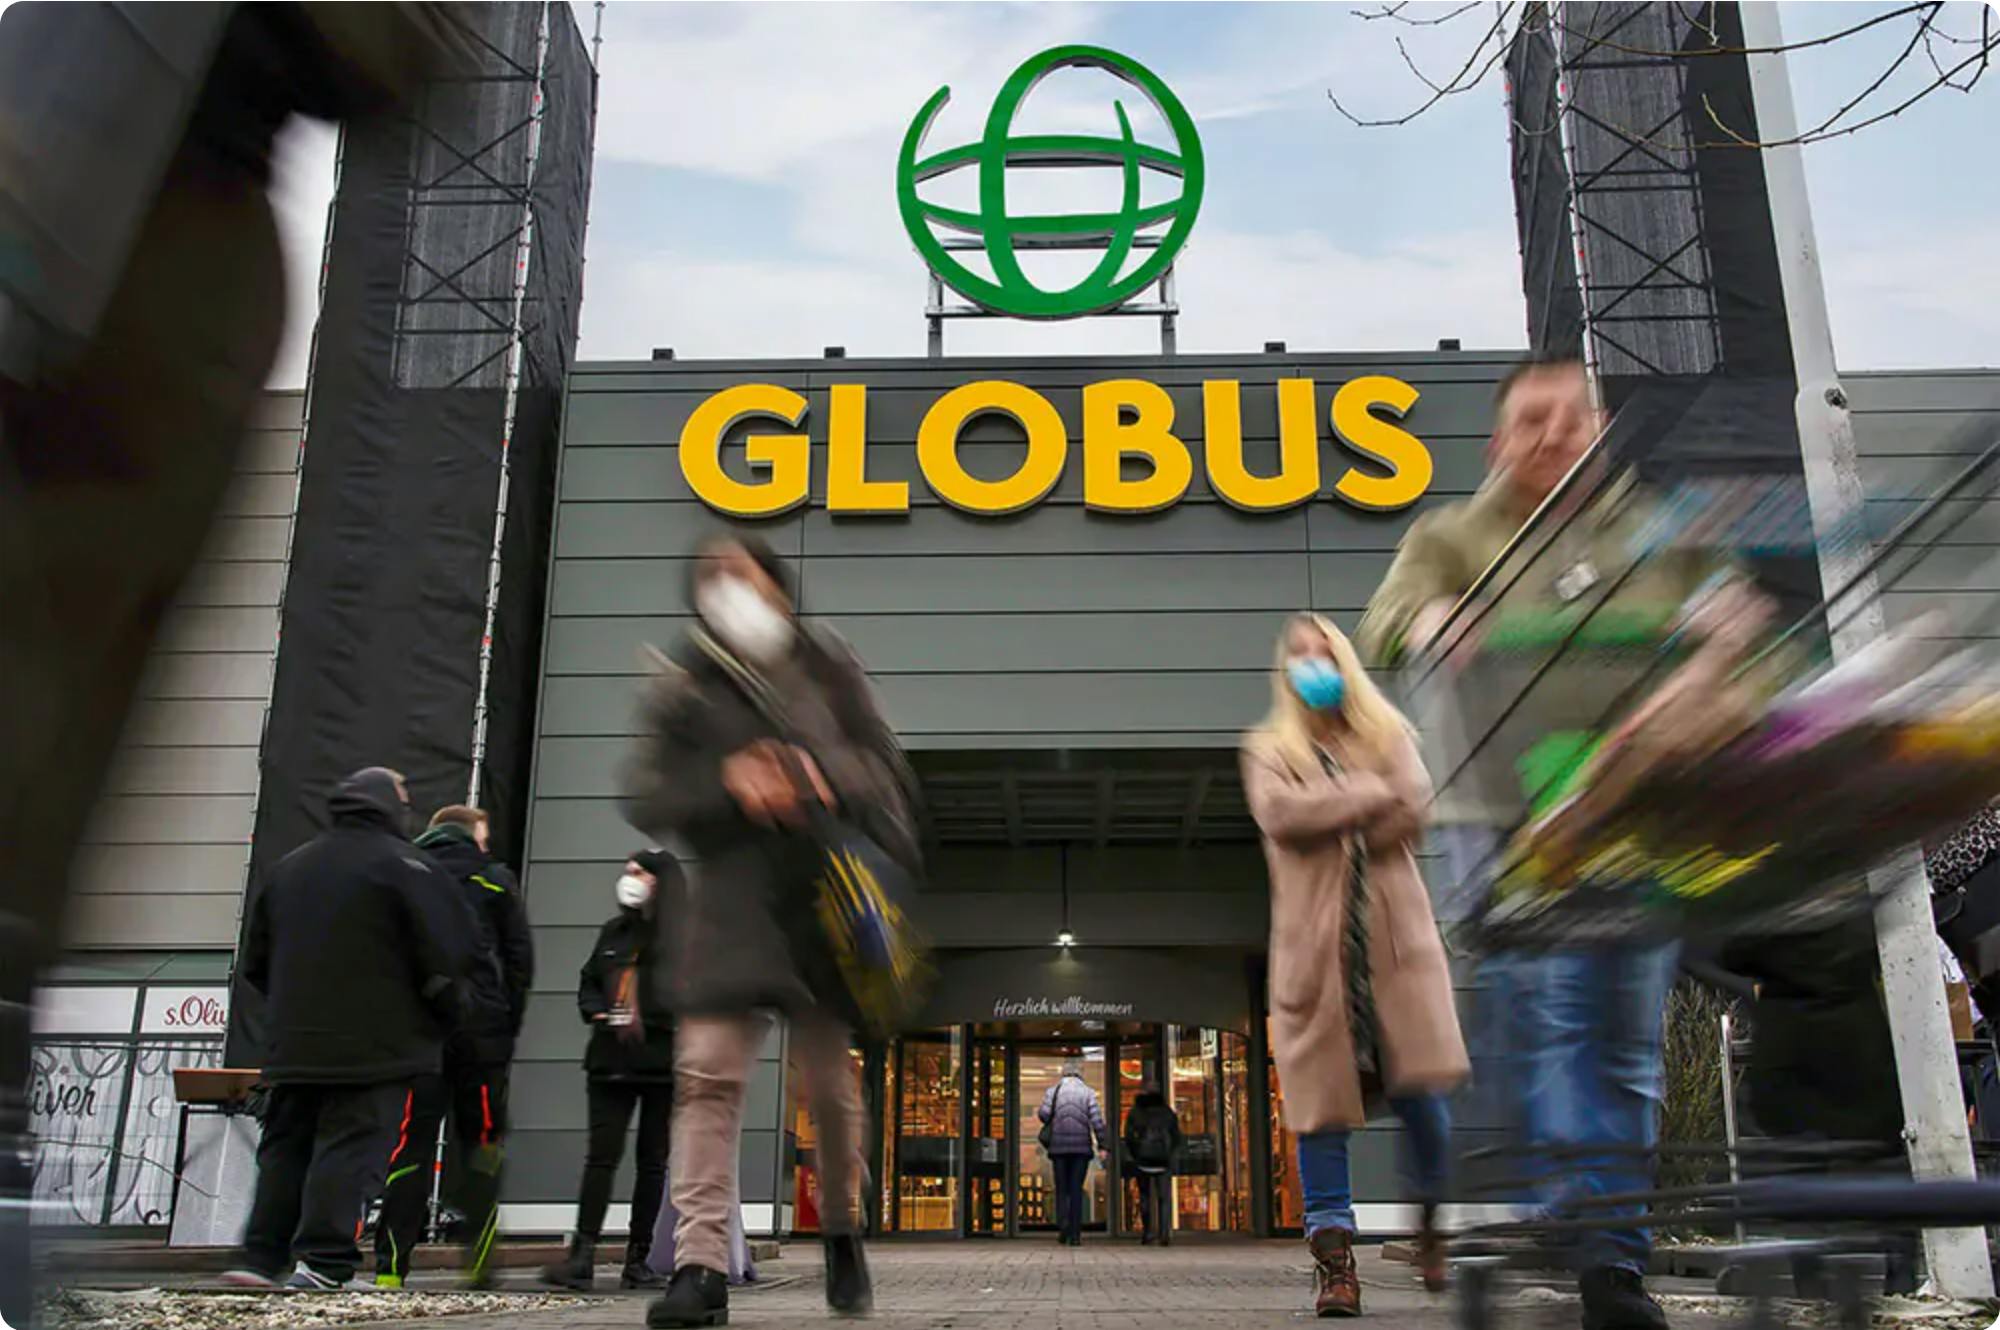 GLOBUS New logo store sntrance